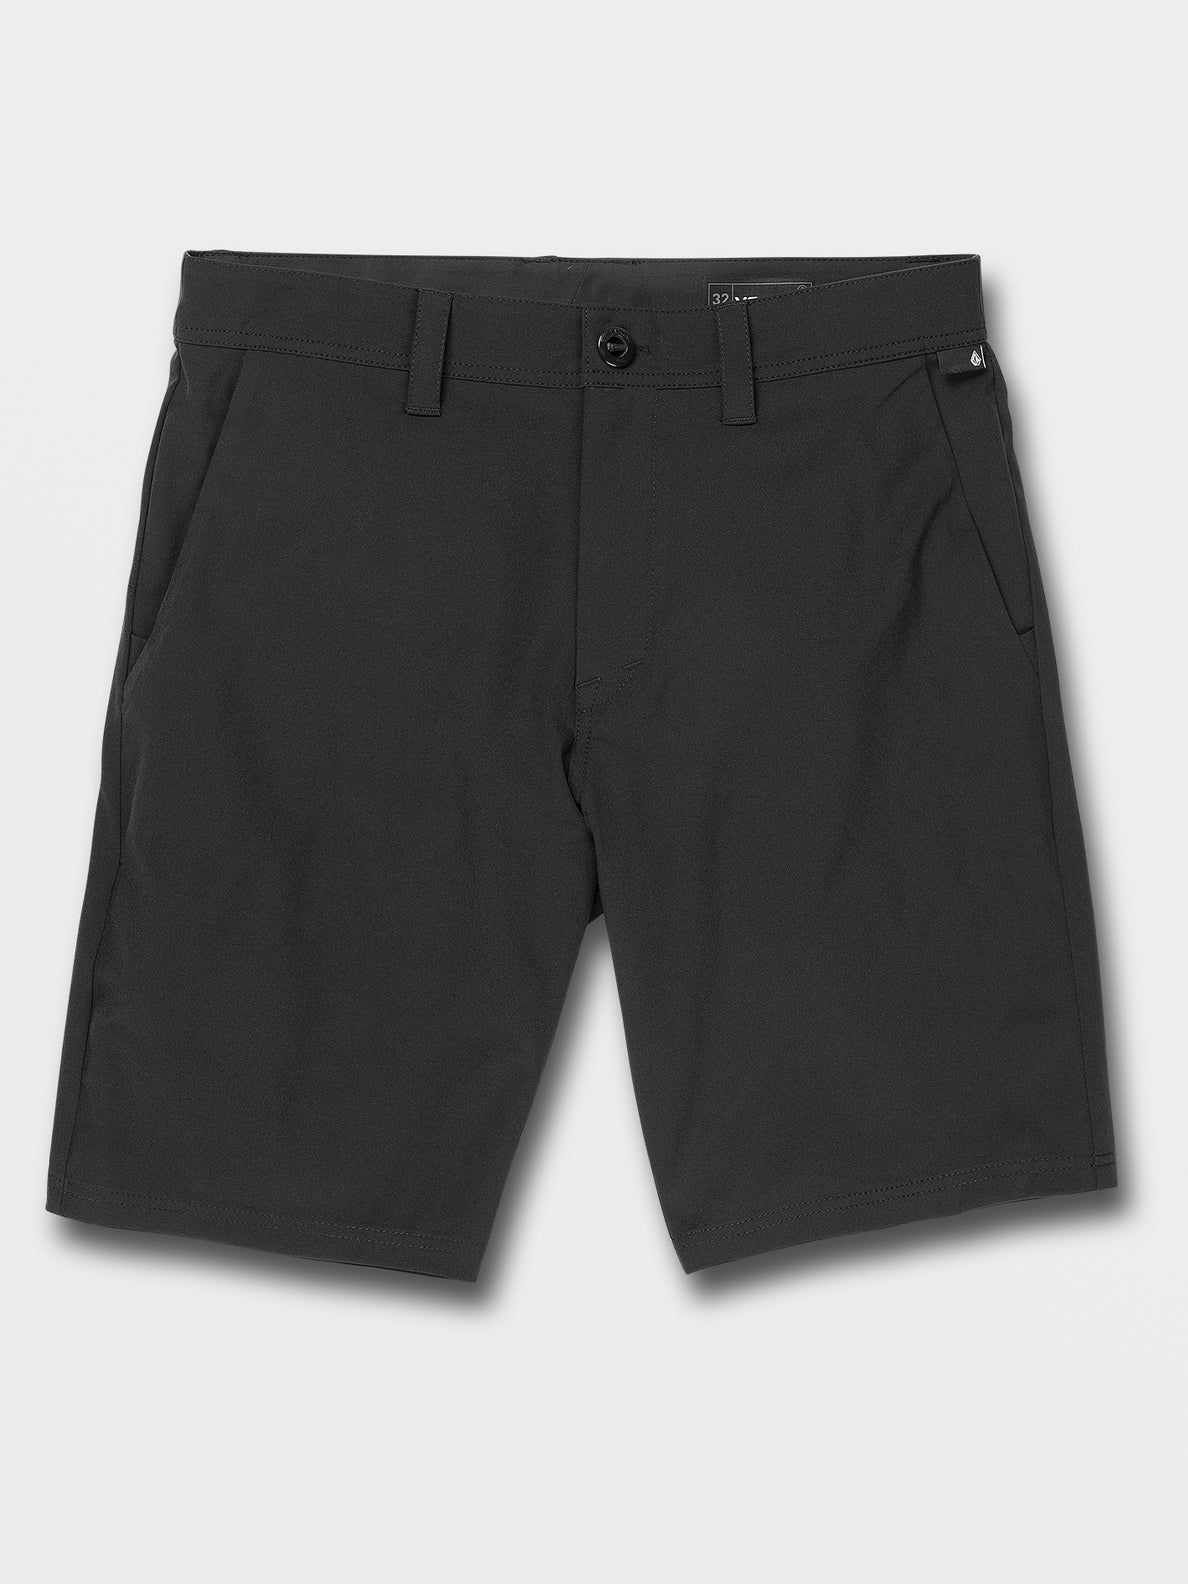 Men's Volcom black shorts